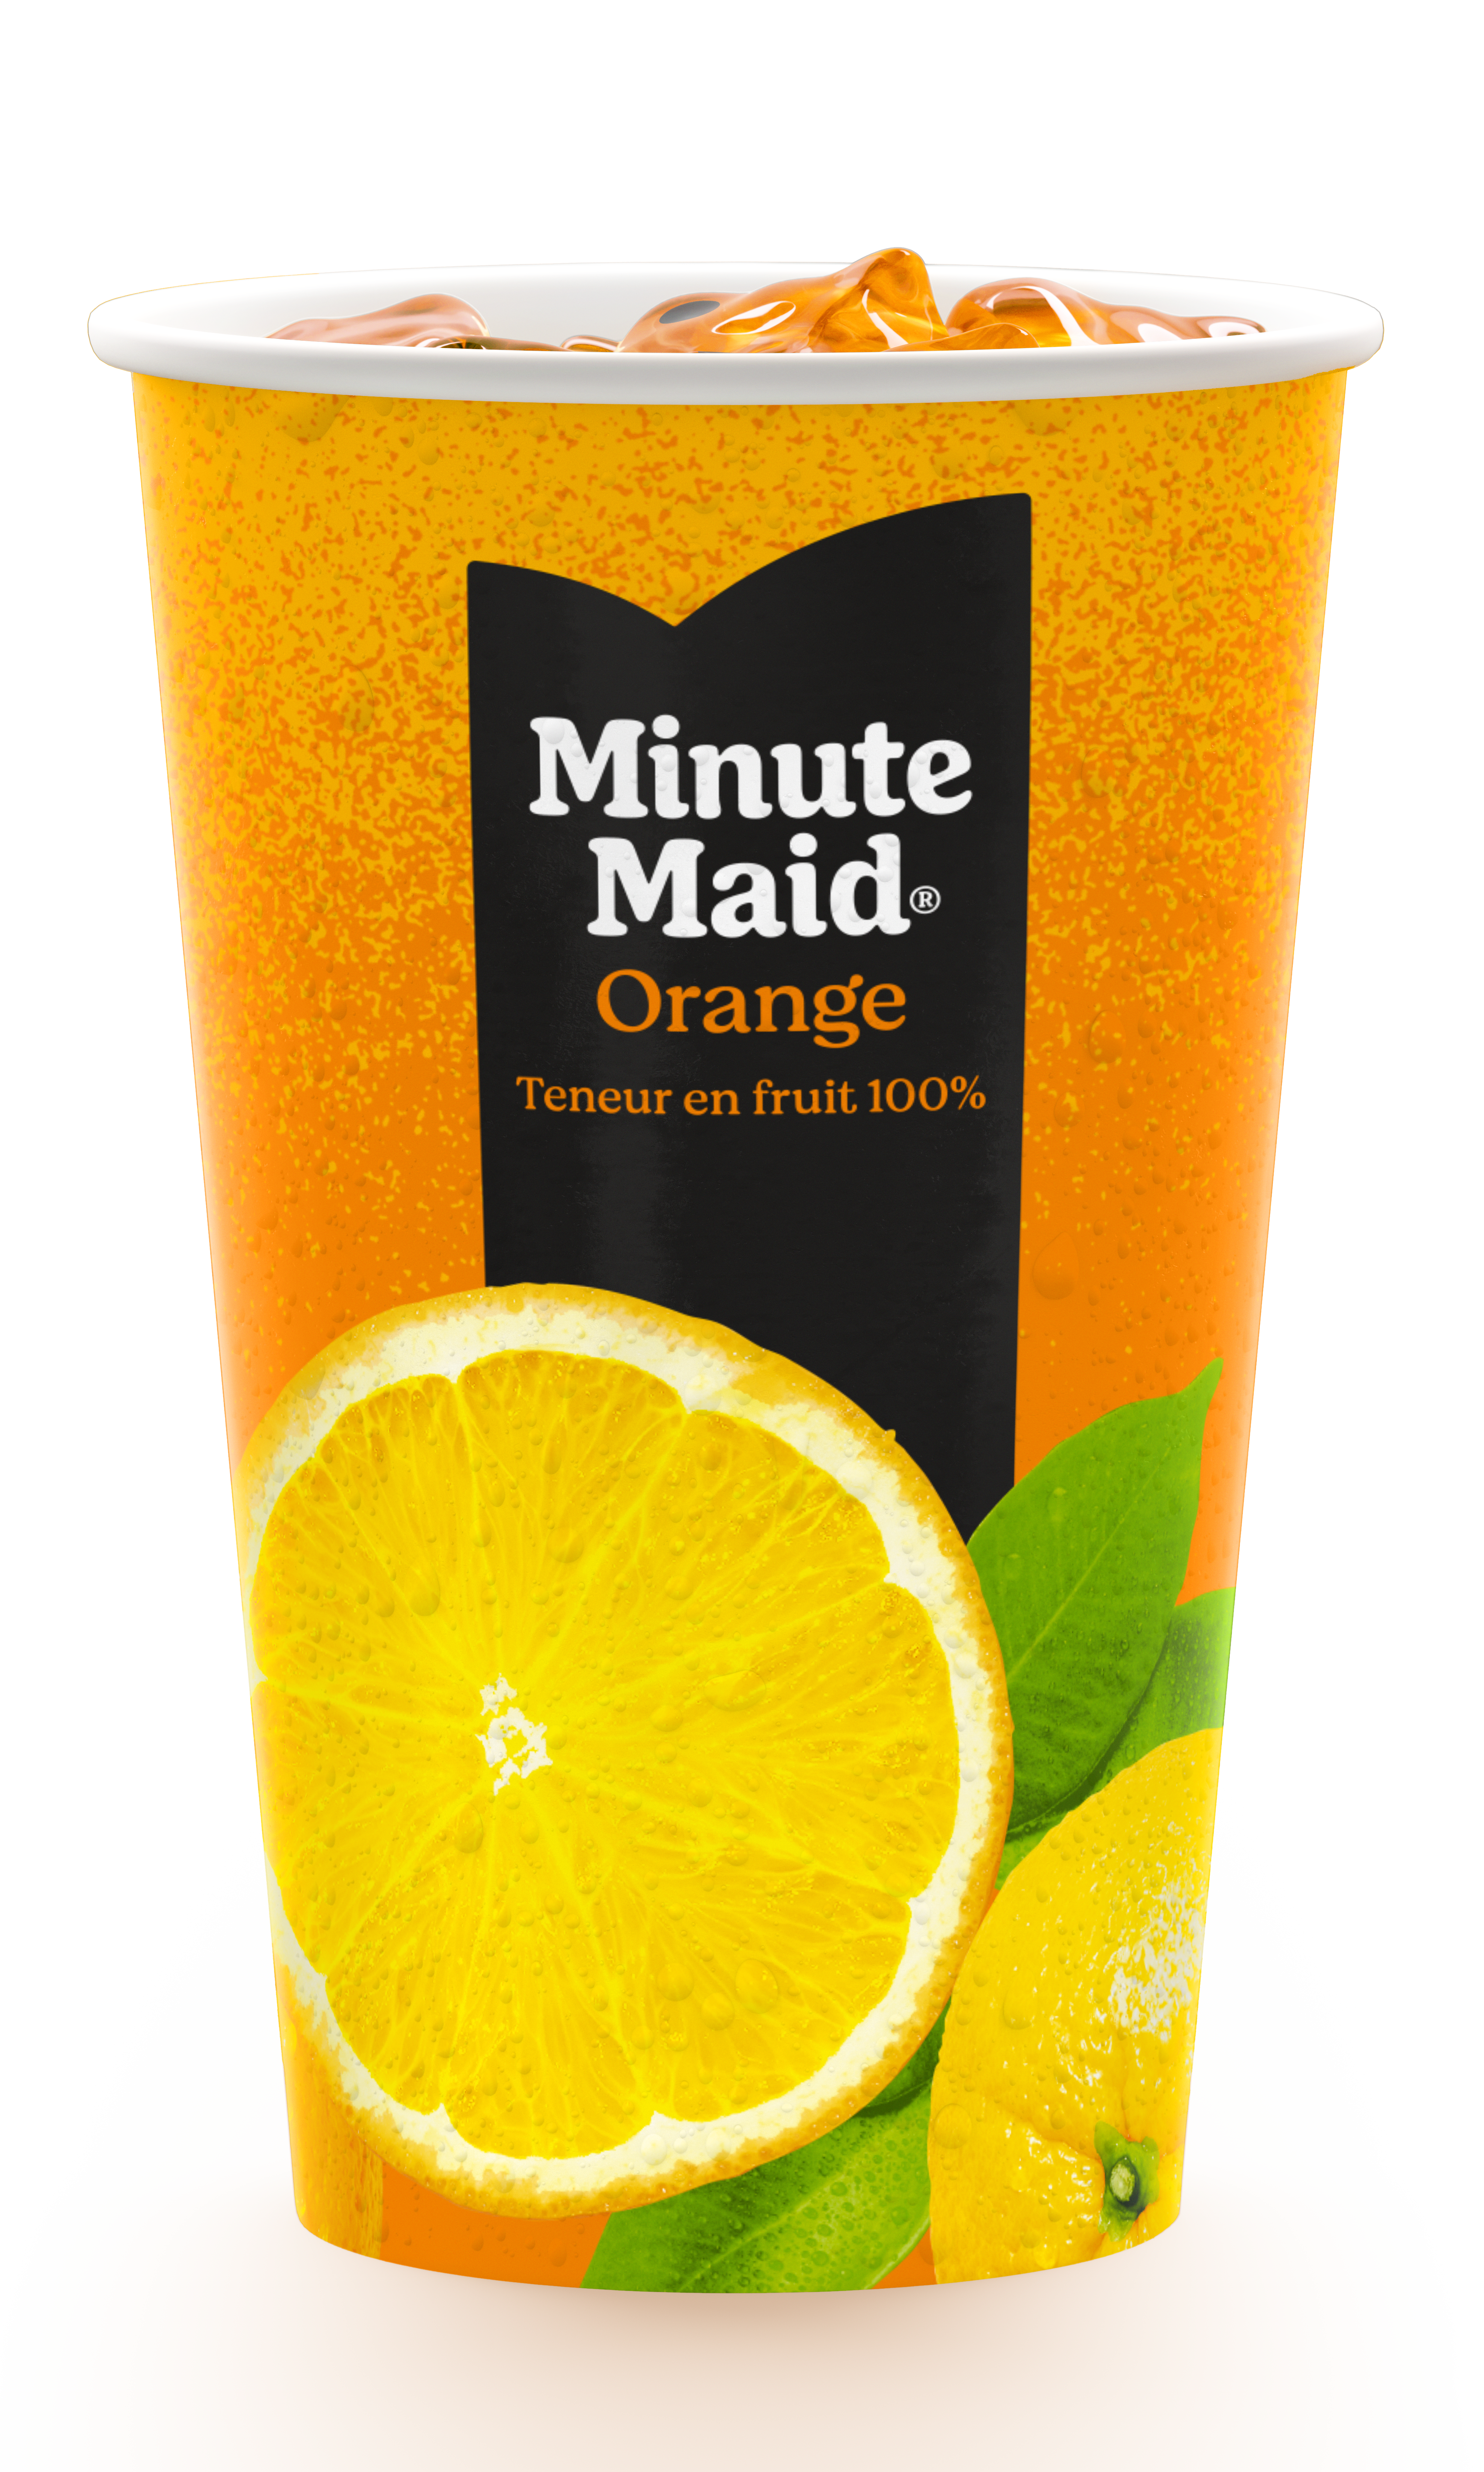 Cup de Minute Maid orange